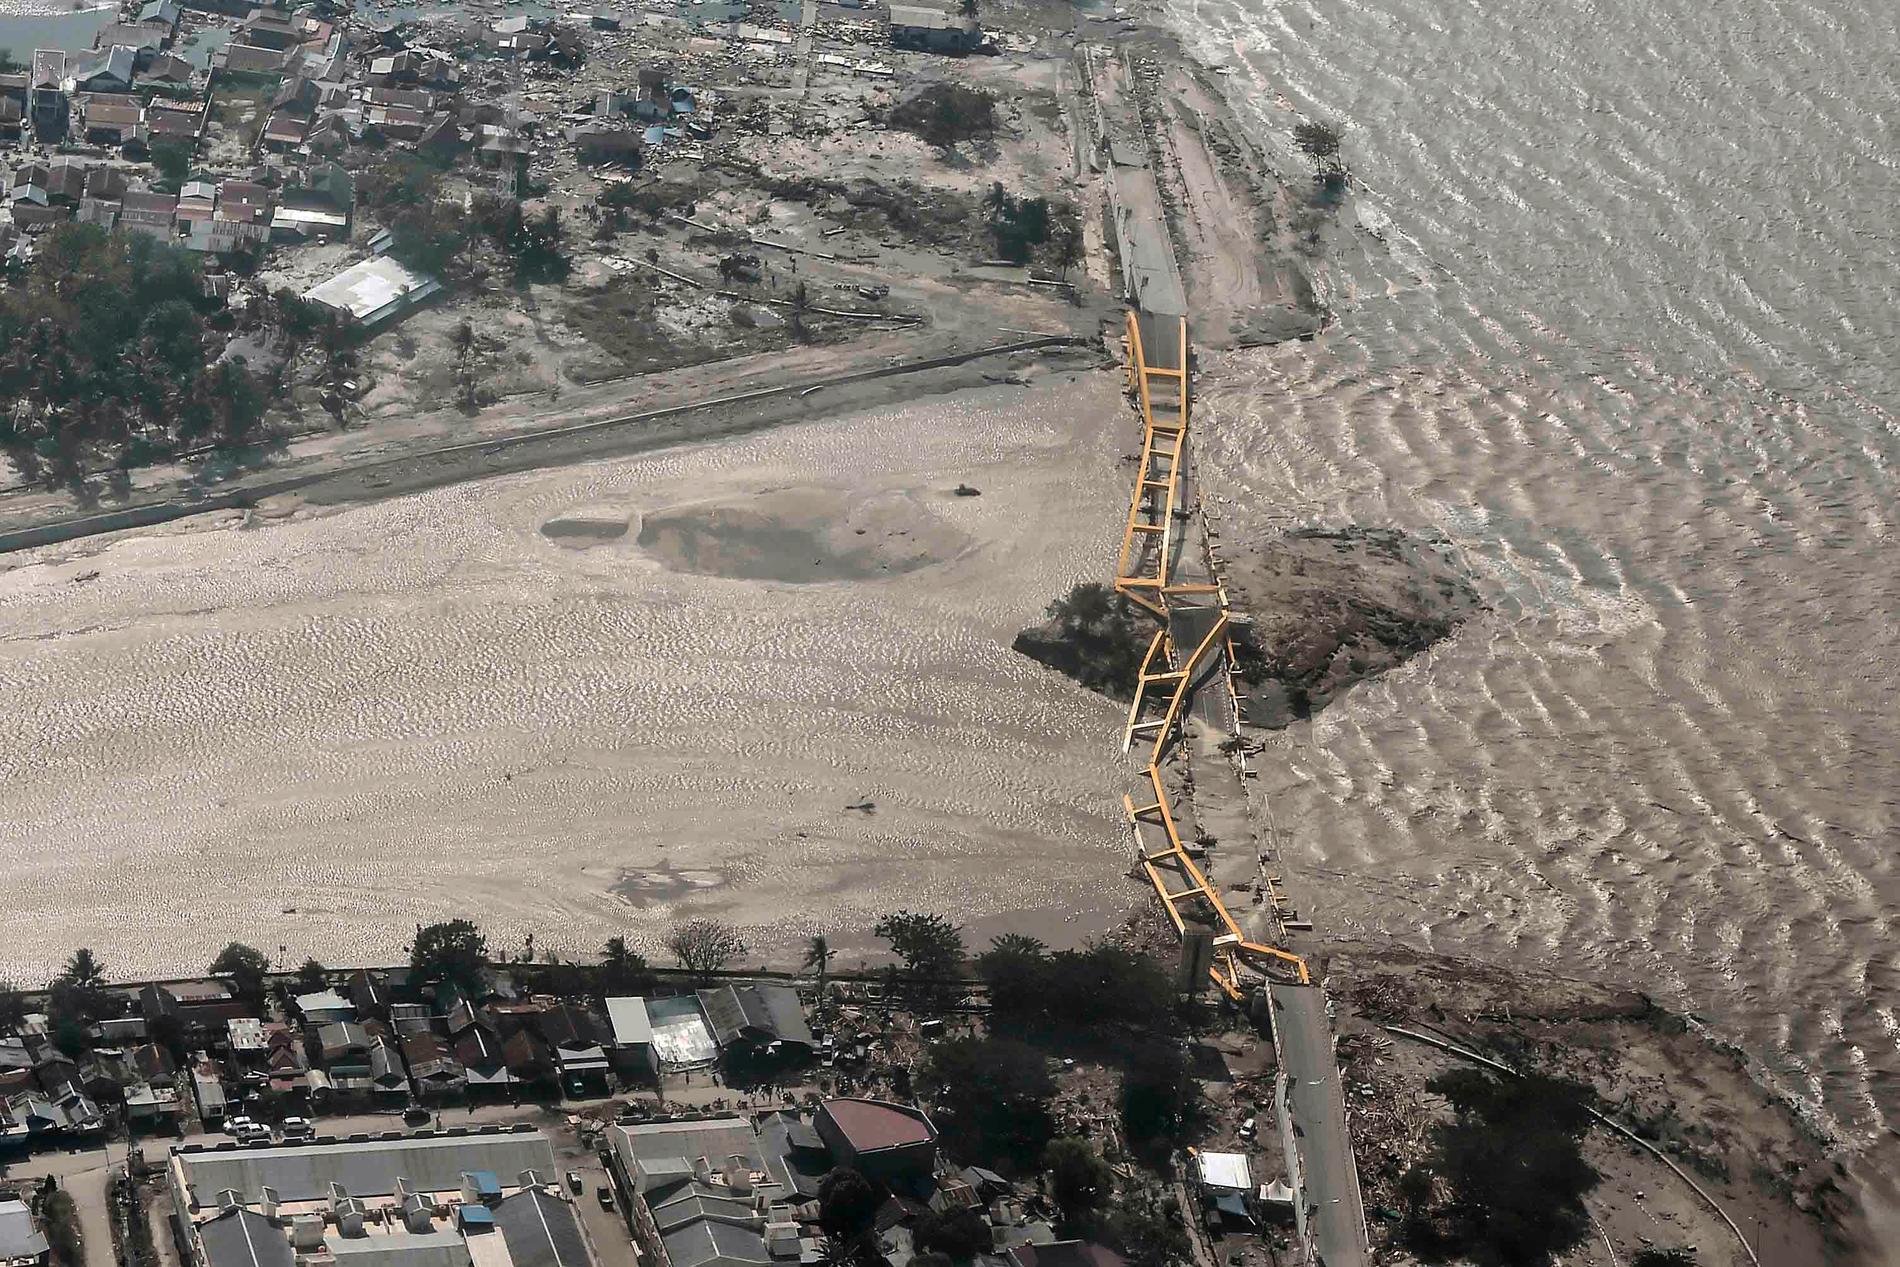 Bron närmast havet över Palu River har helt kollapsat. 